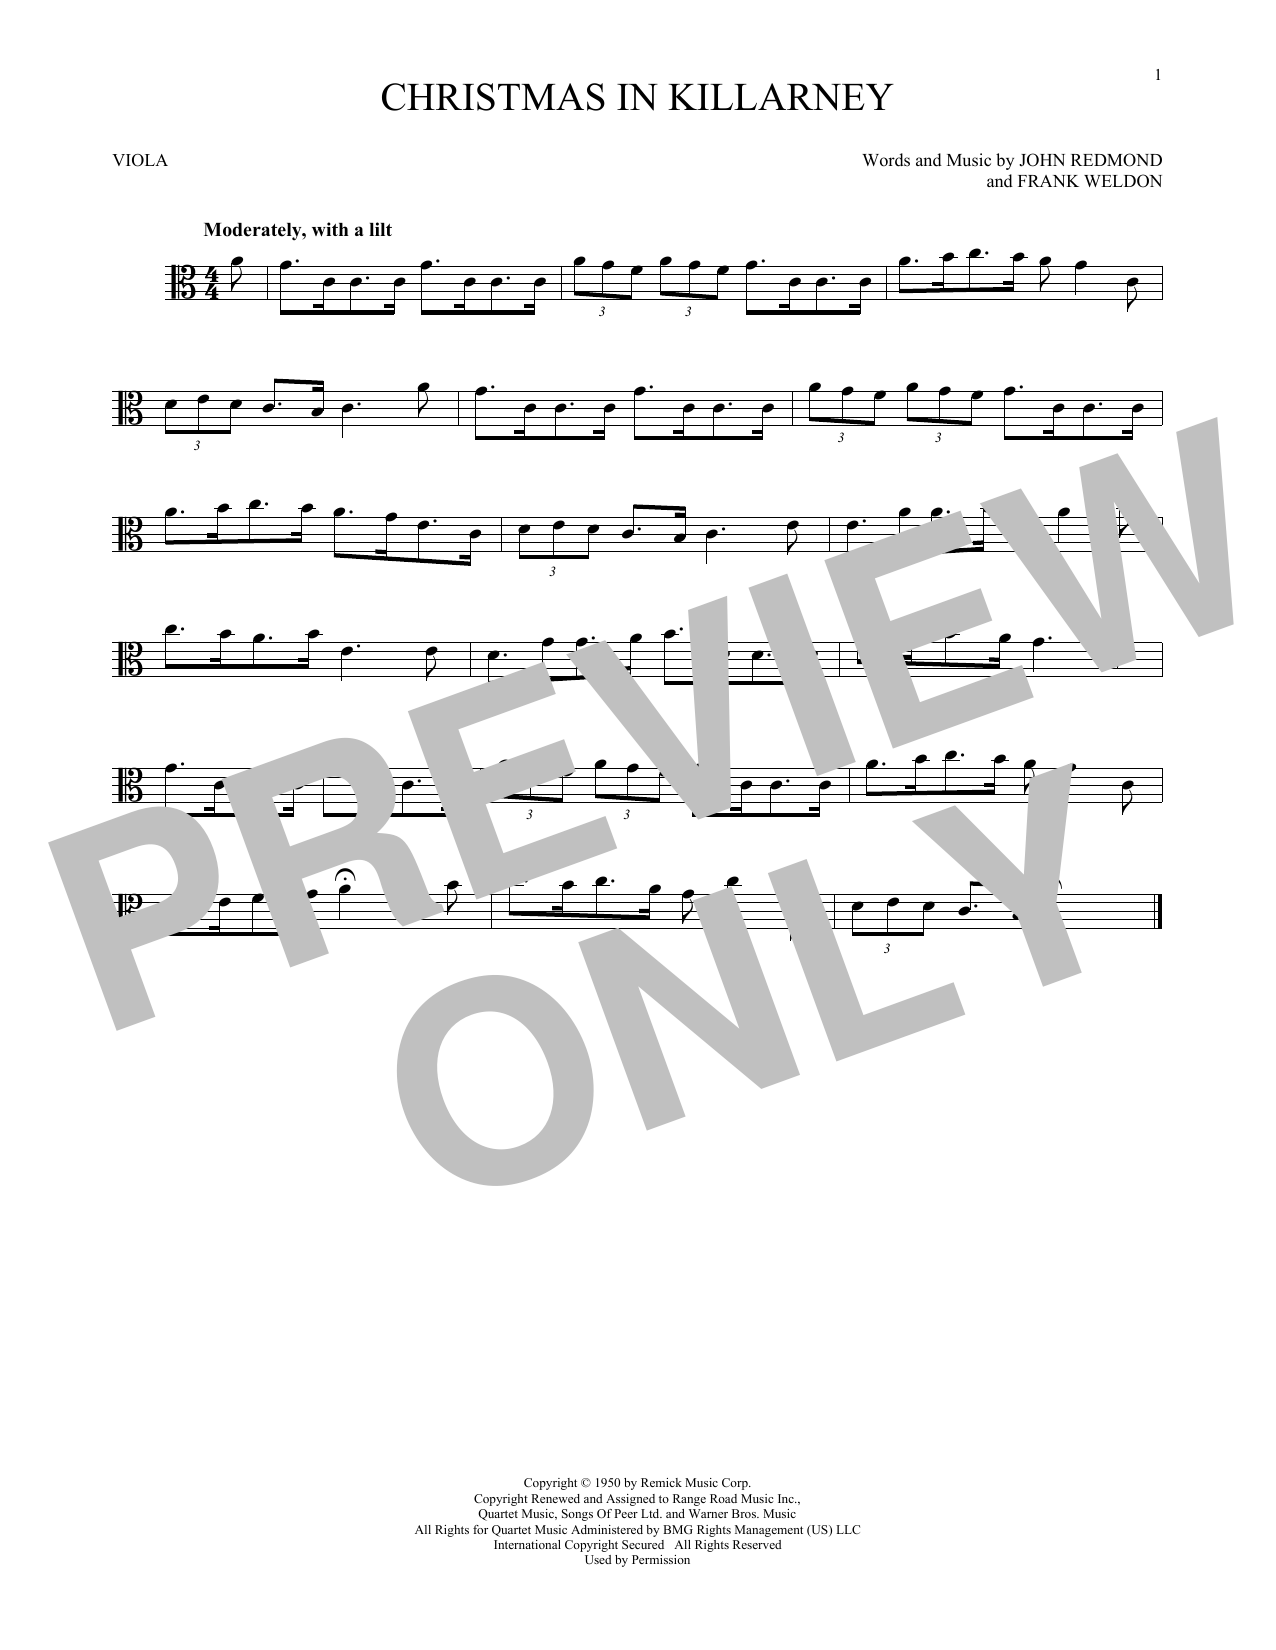 Download John Redmond & Frank Weldon Christmas In Killarney Sheet Music and learn how to play Trombone Solo PDF digital score in minutes